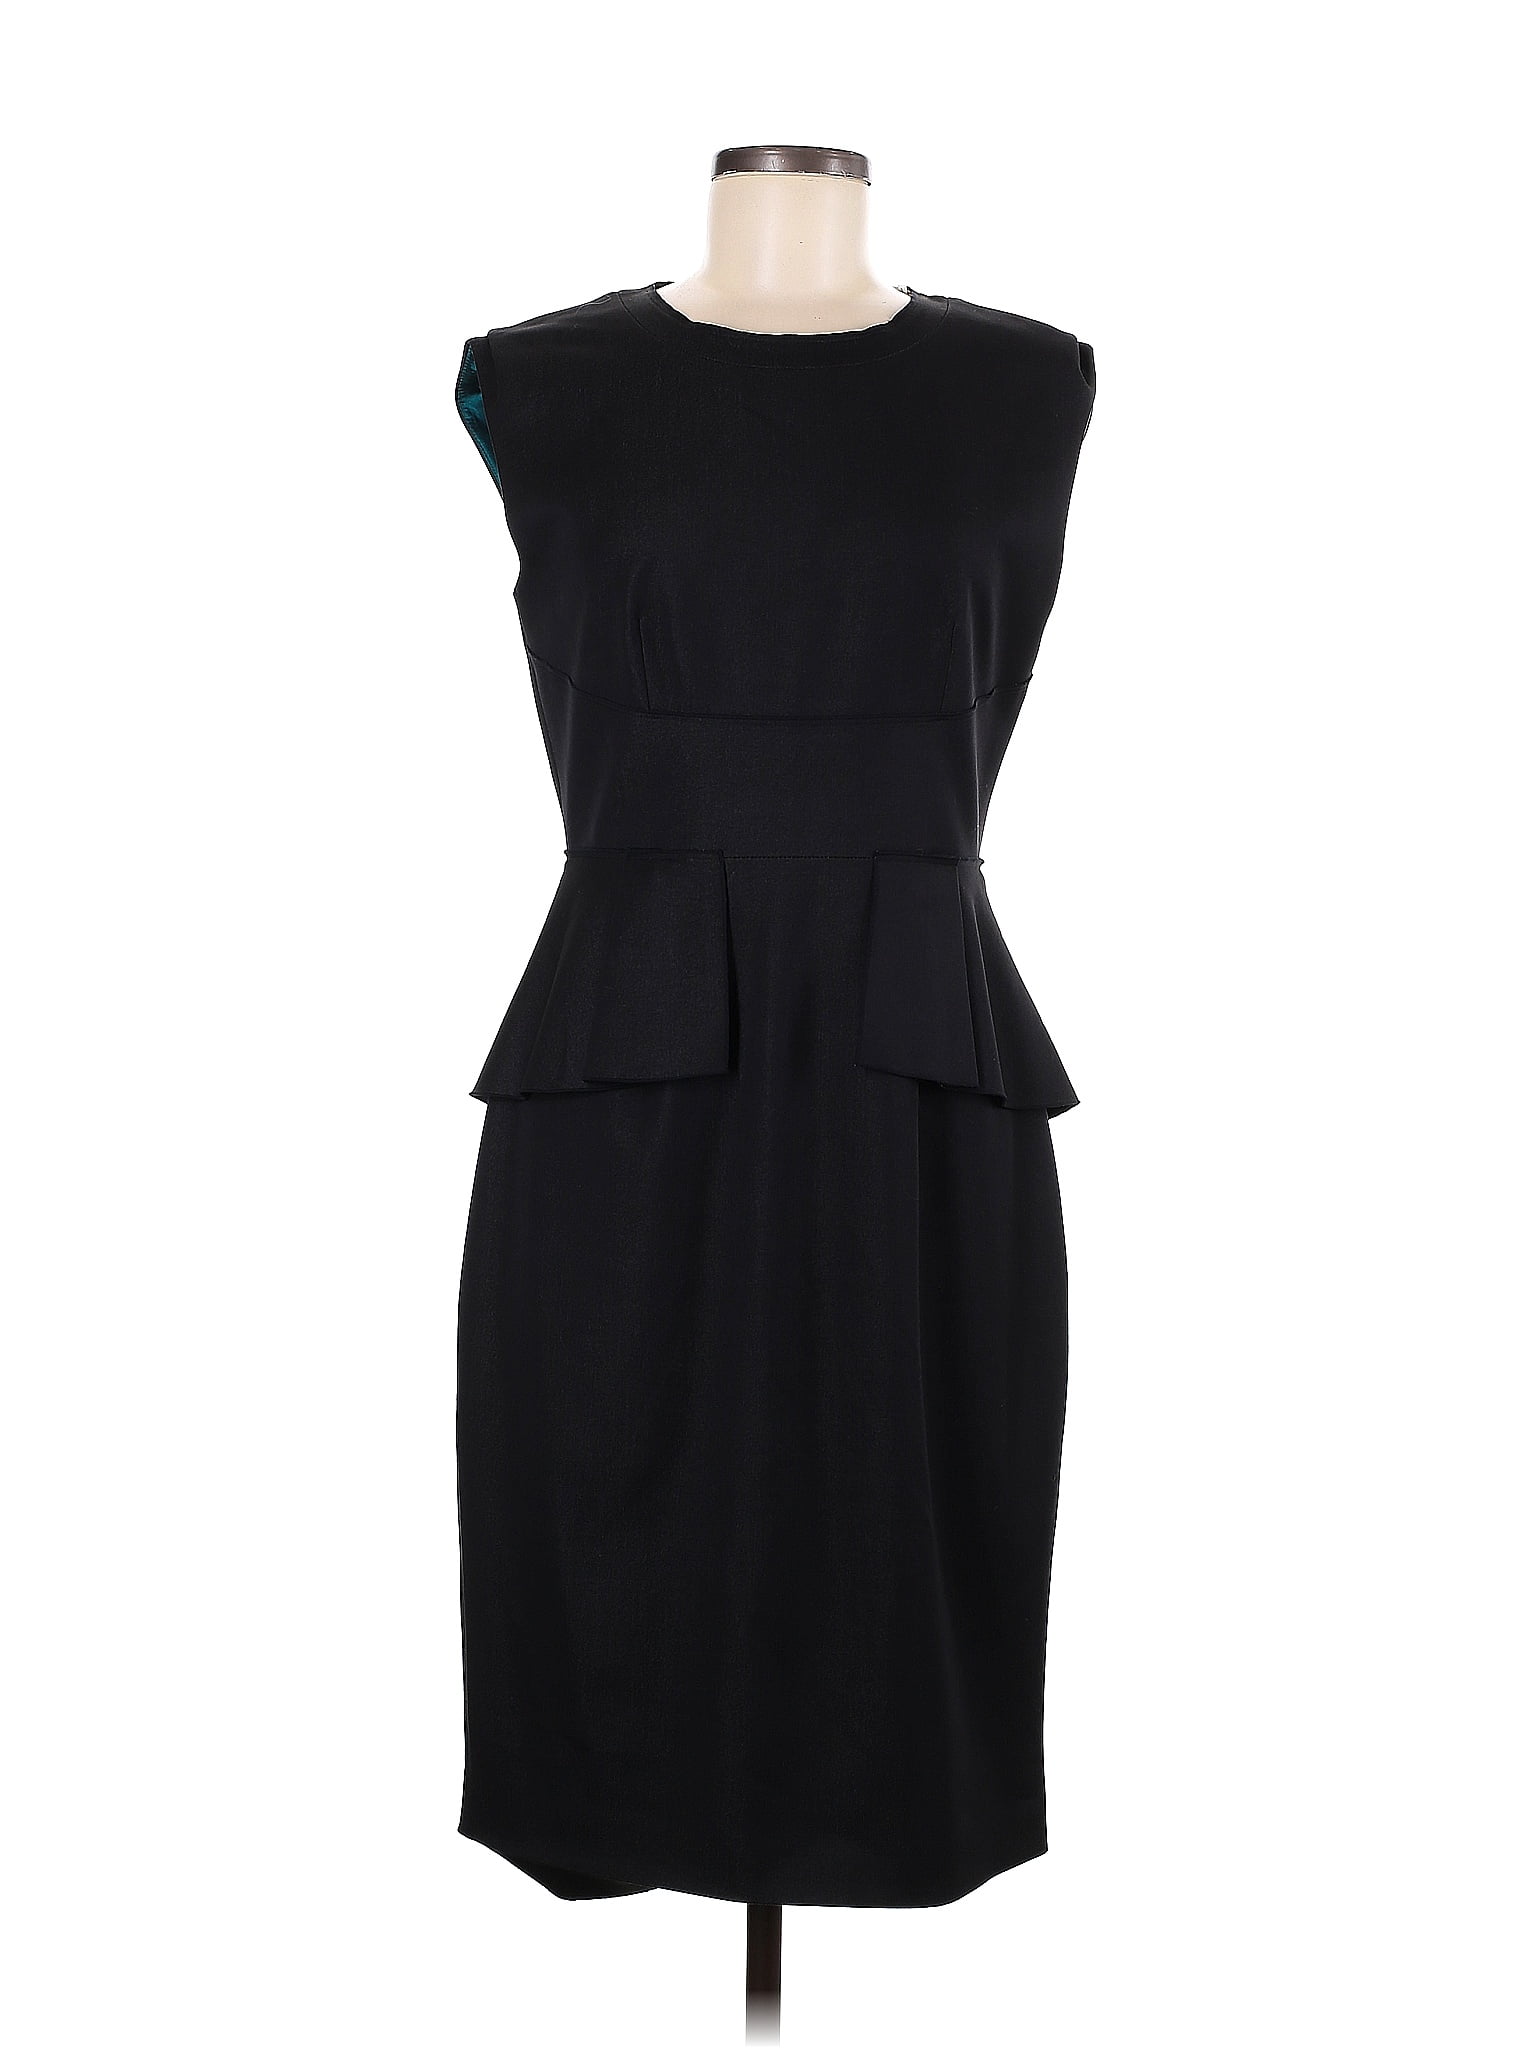 Tahari Solid Black Cocktail Dress Size 8 - 77% off | thredUP